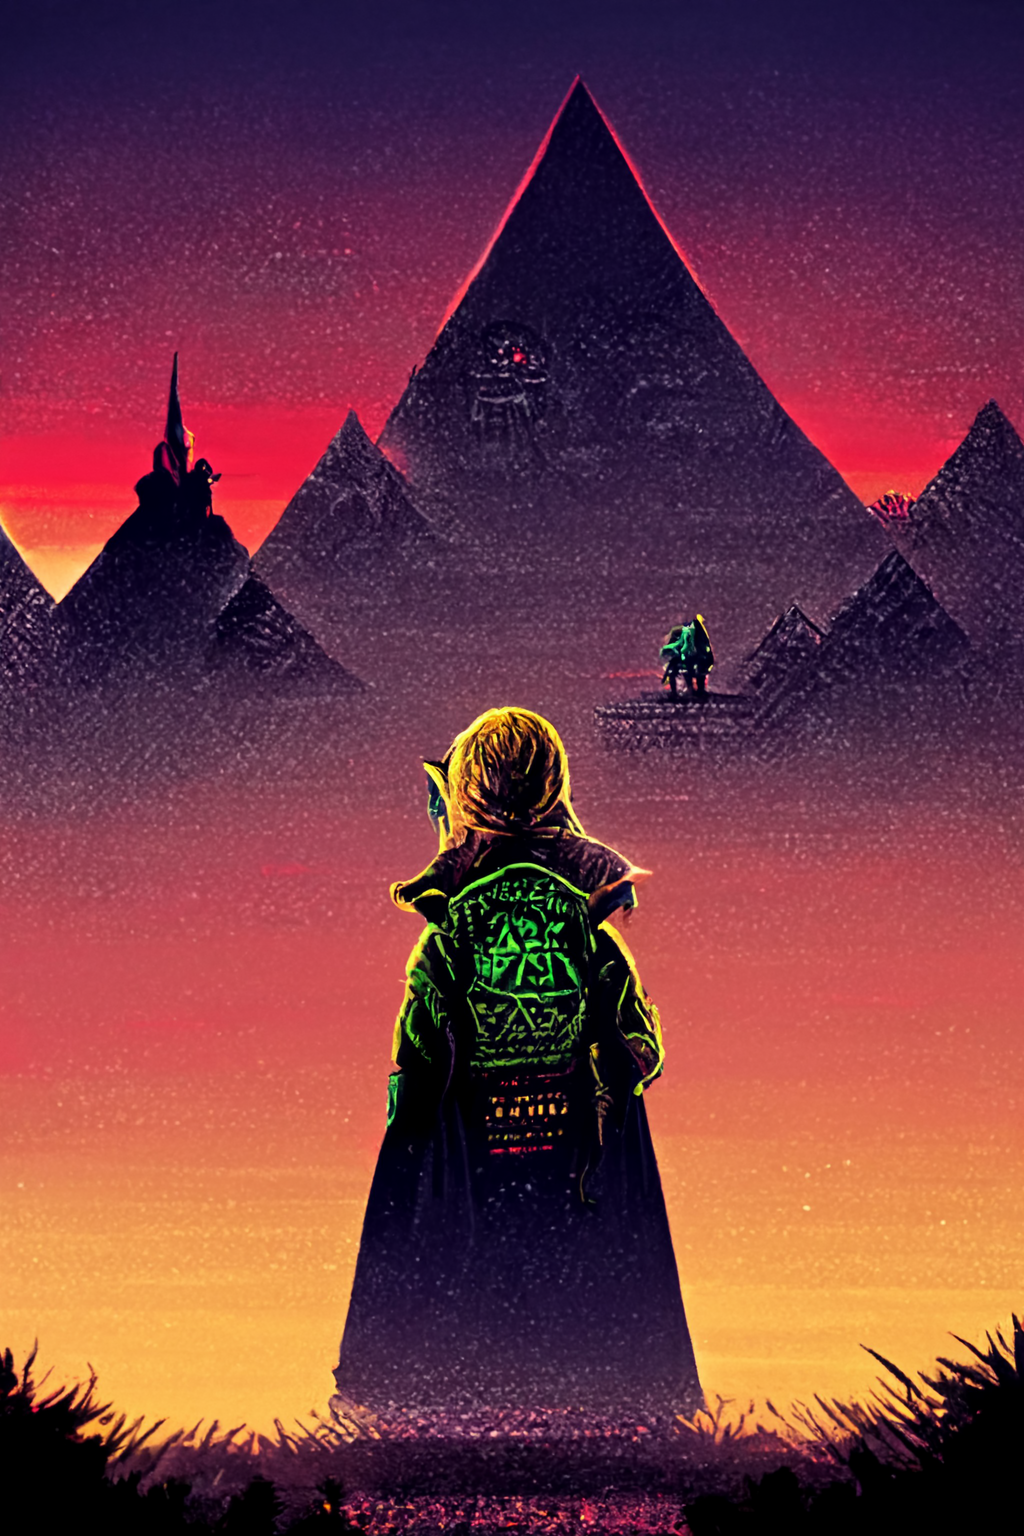 The Lost Woods [Zelda: Ocarina of Time] by Morphona on DeviantArt